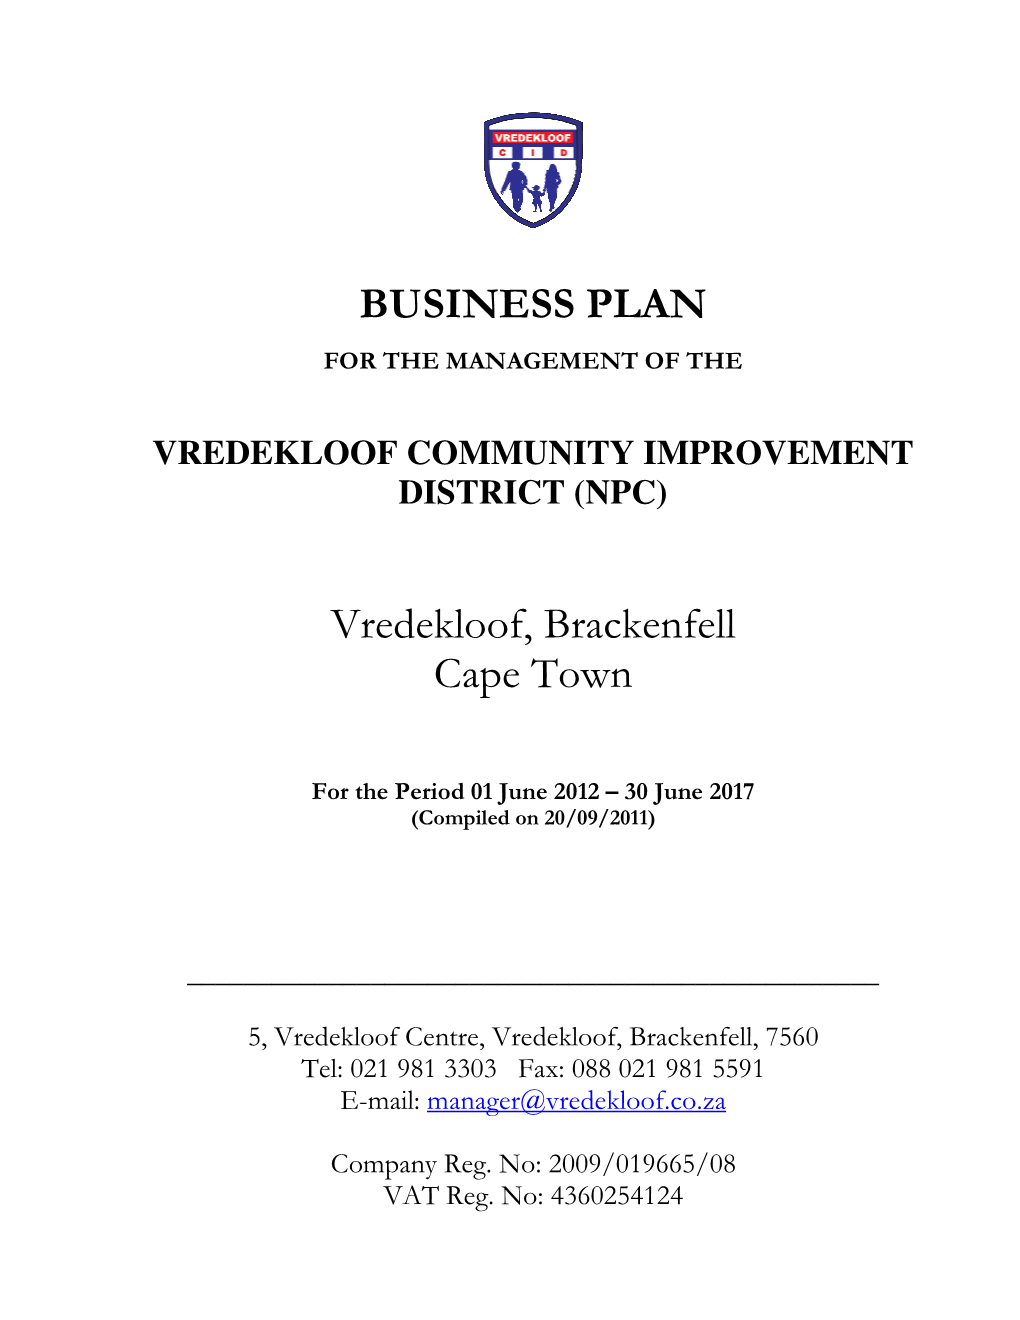 BUSINESS PLAN Vredekloof, Brackenfell Cape Town